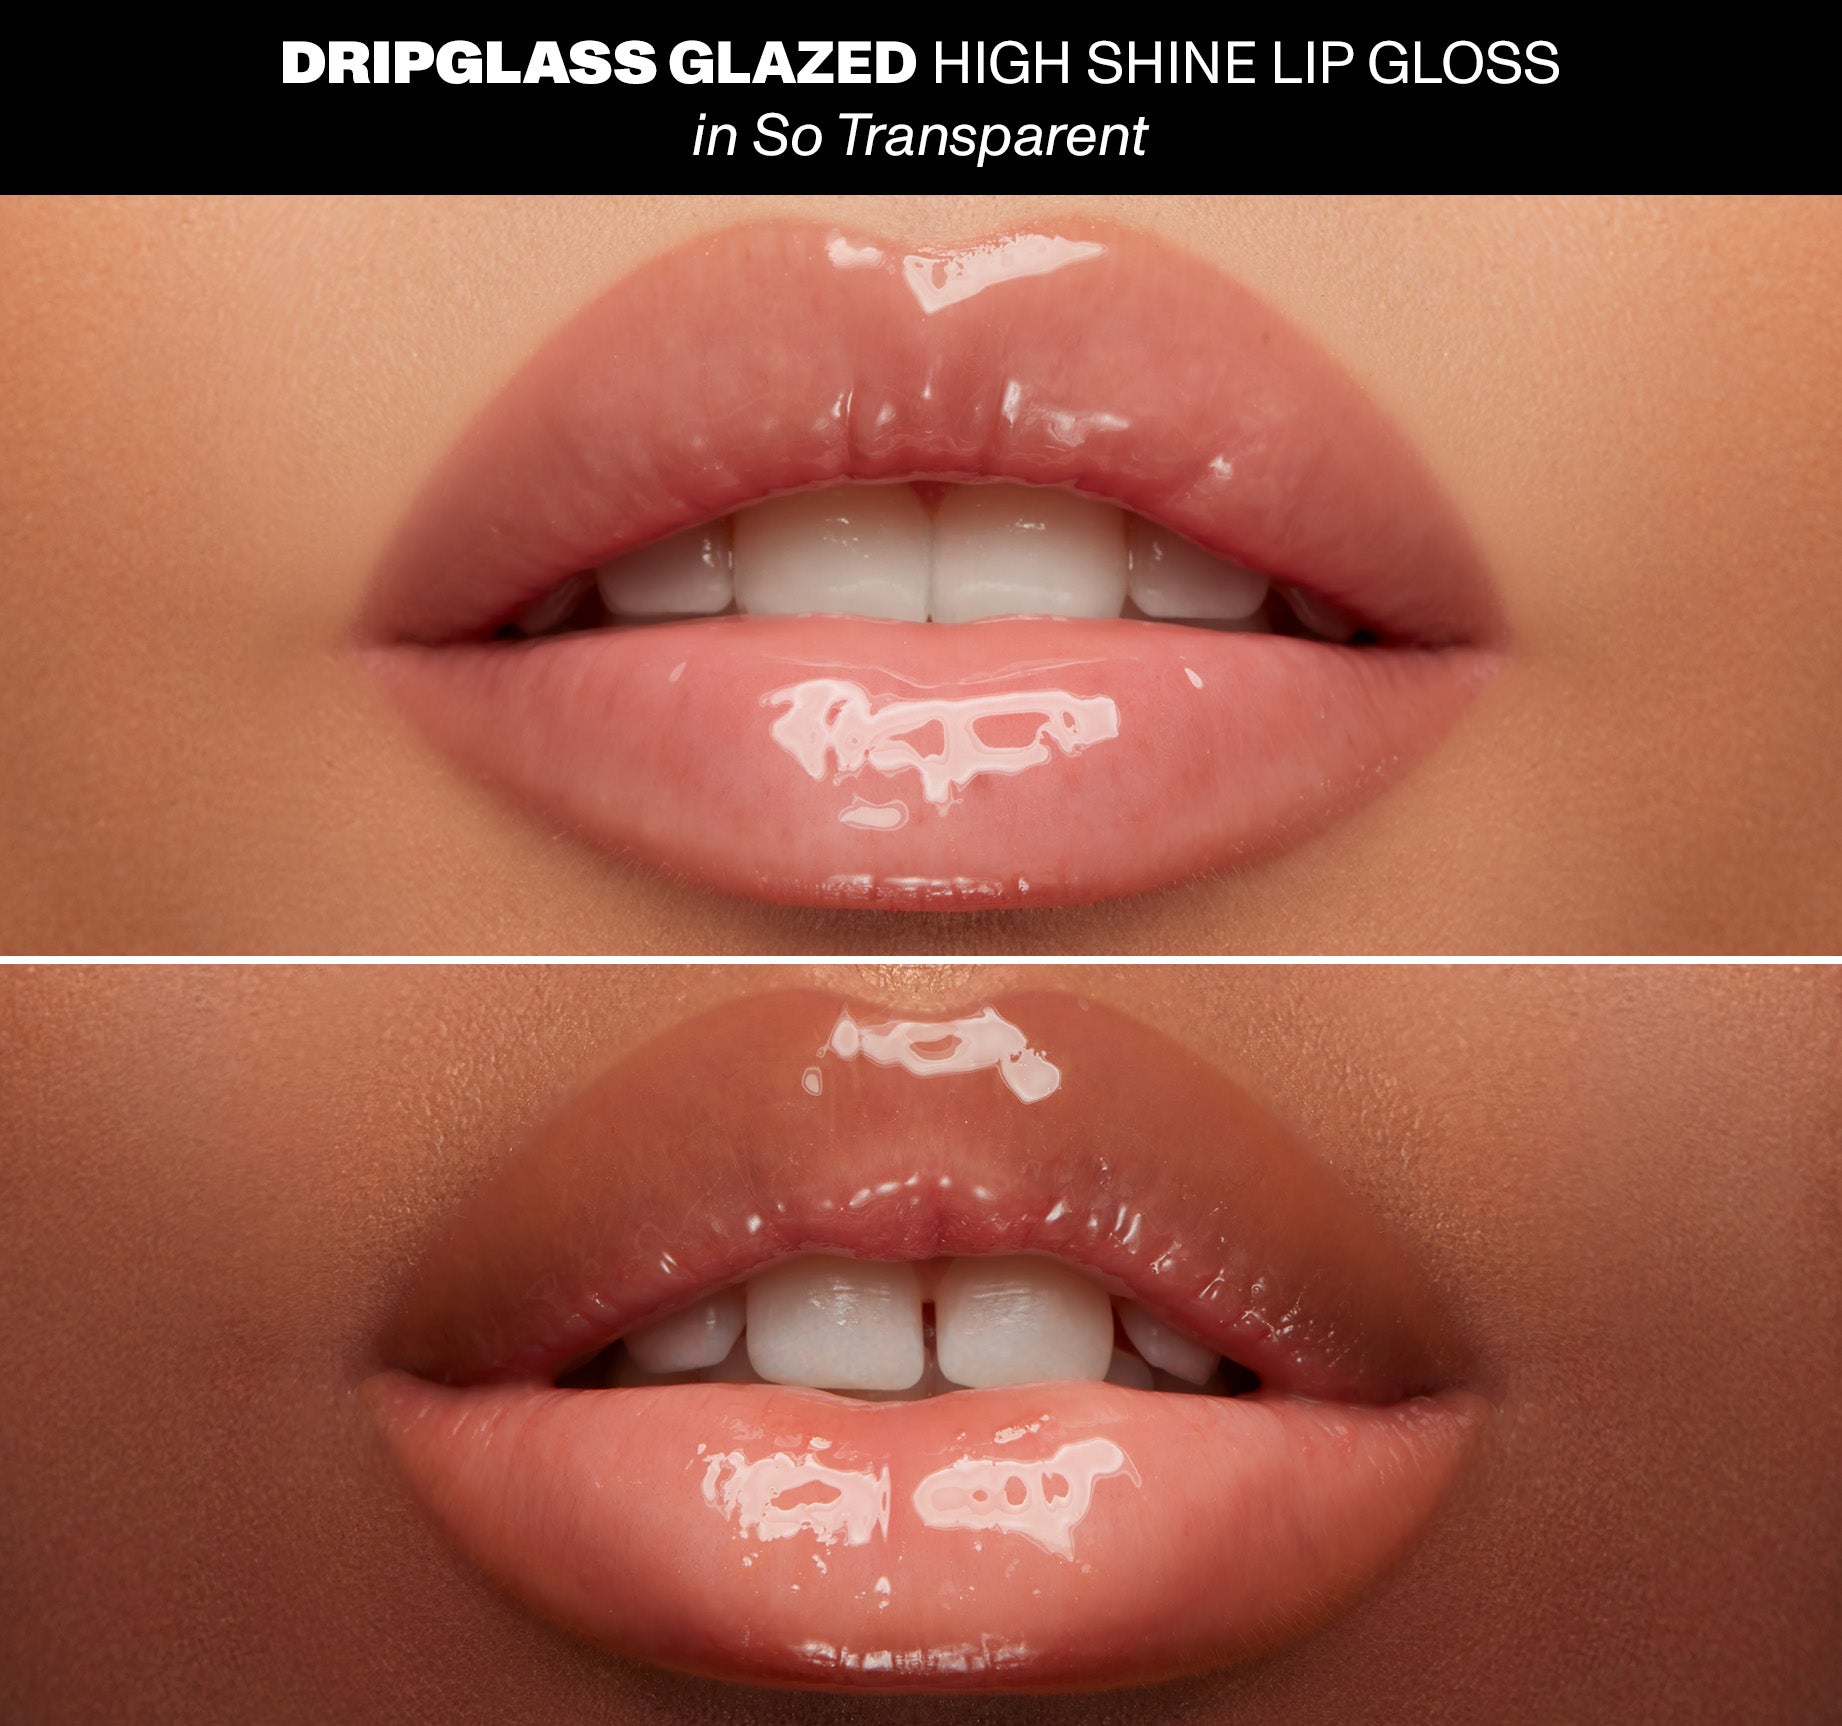 Dripglass Glazed High Shine Lip Gloss - So Transparent - Image 4